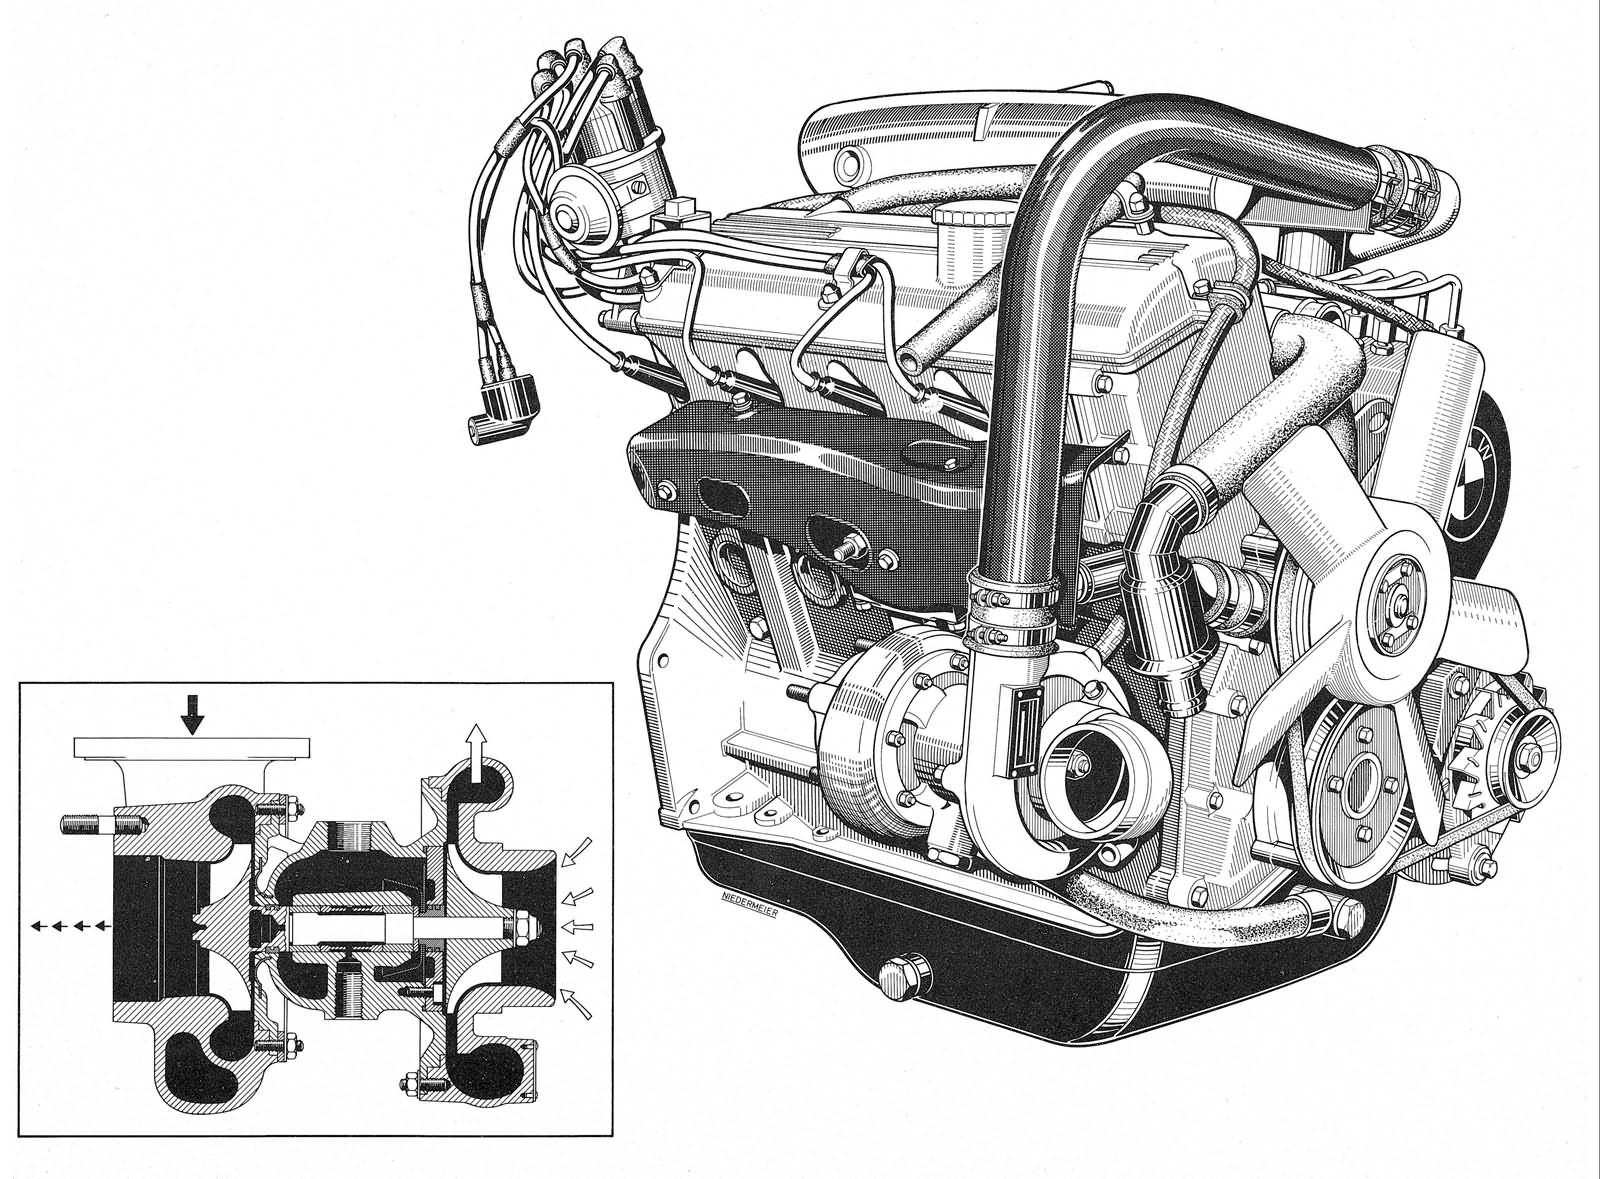 Turbo-Motor vom BMW 2002 turbo